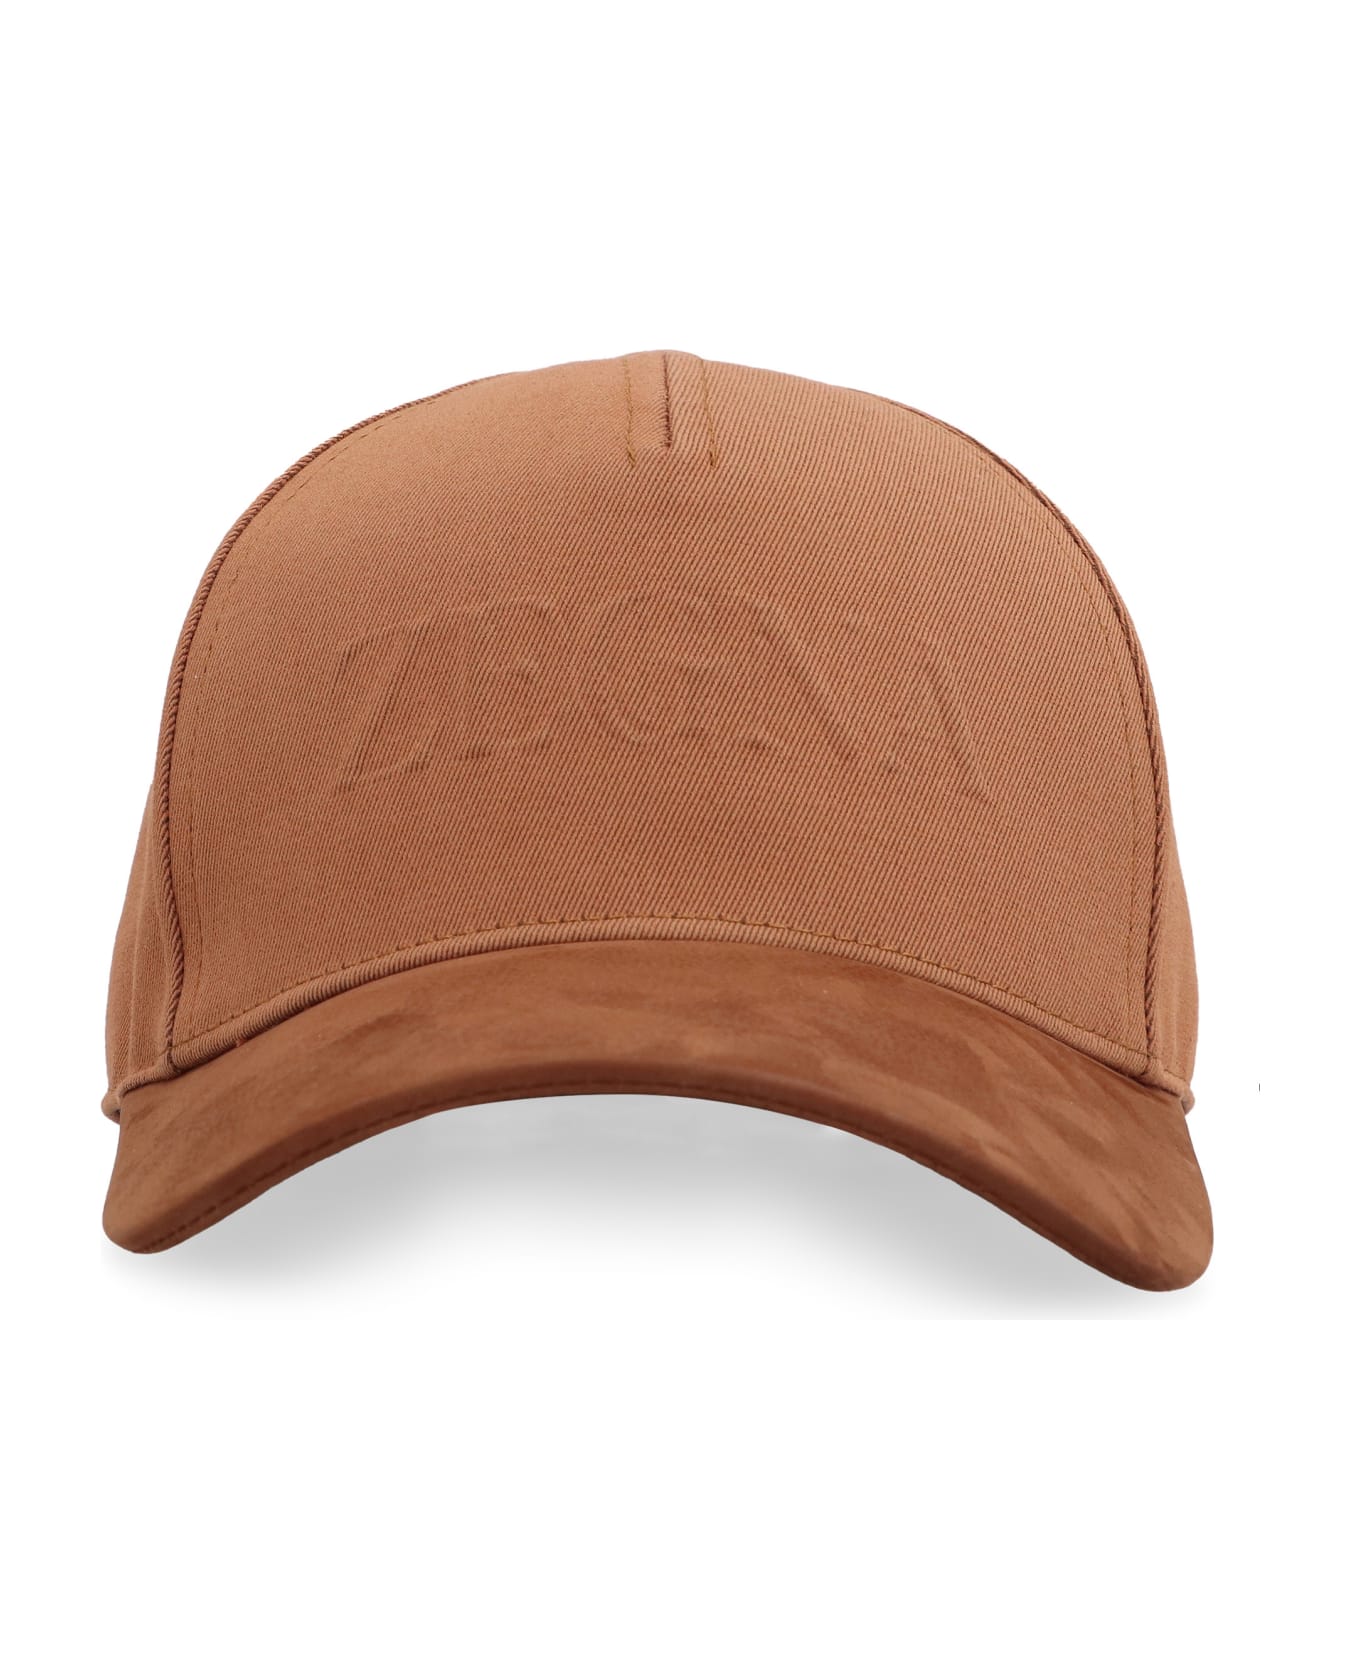 Zegna Logo Baseball Cap - Saddle Brown 帽子